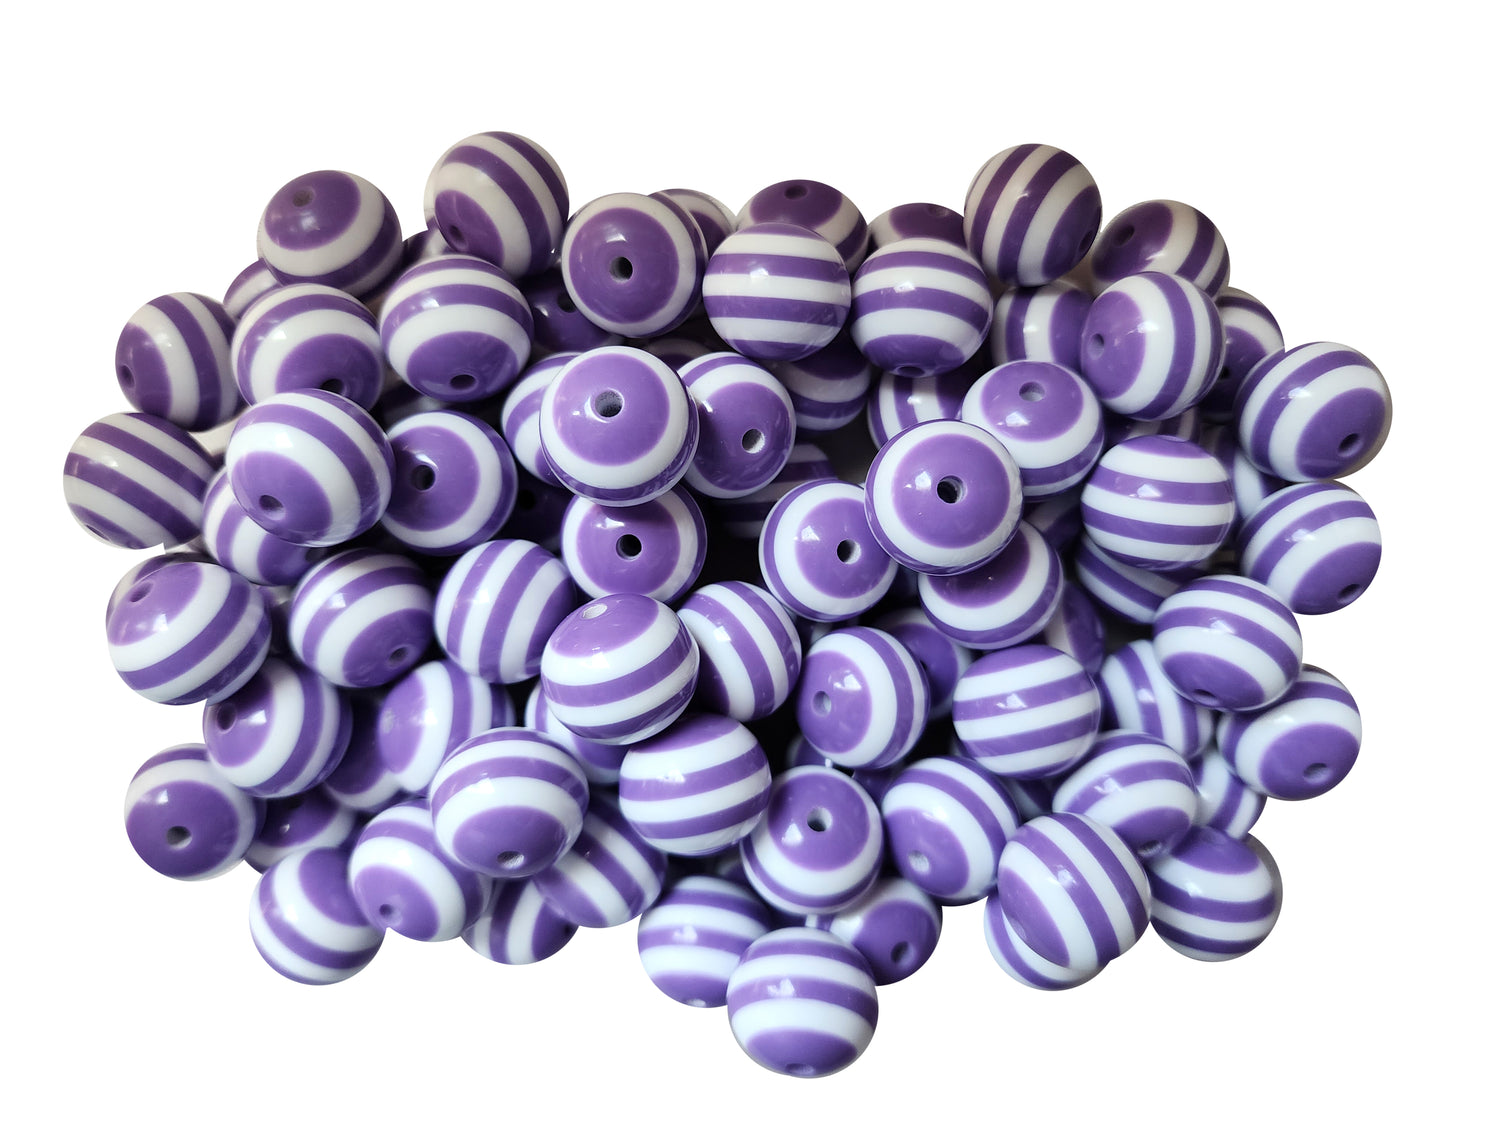 purple striped 20mm wholesale bubblegum beads